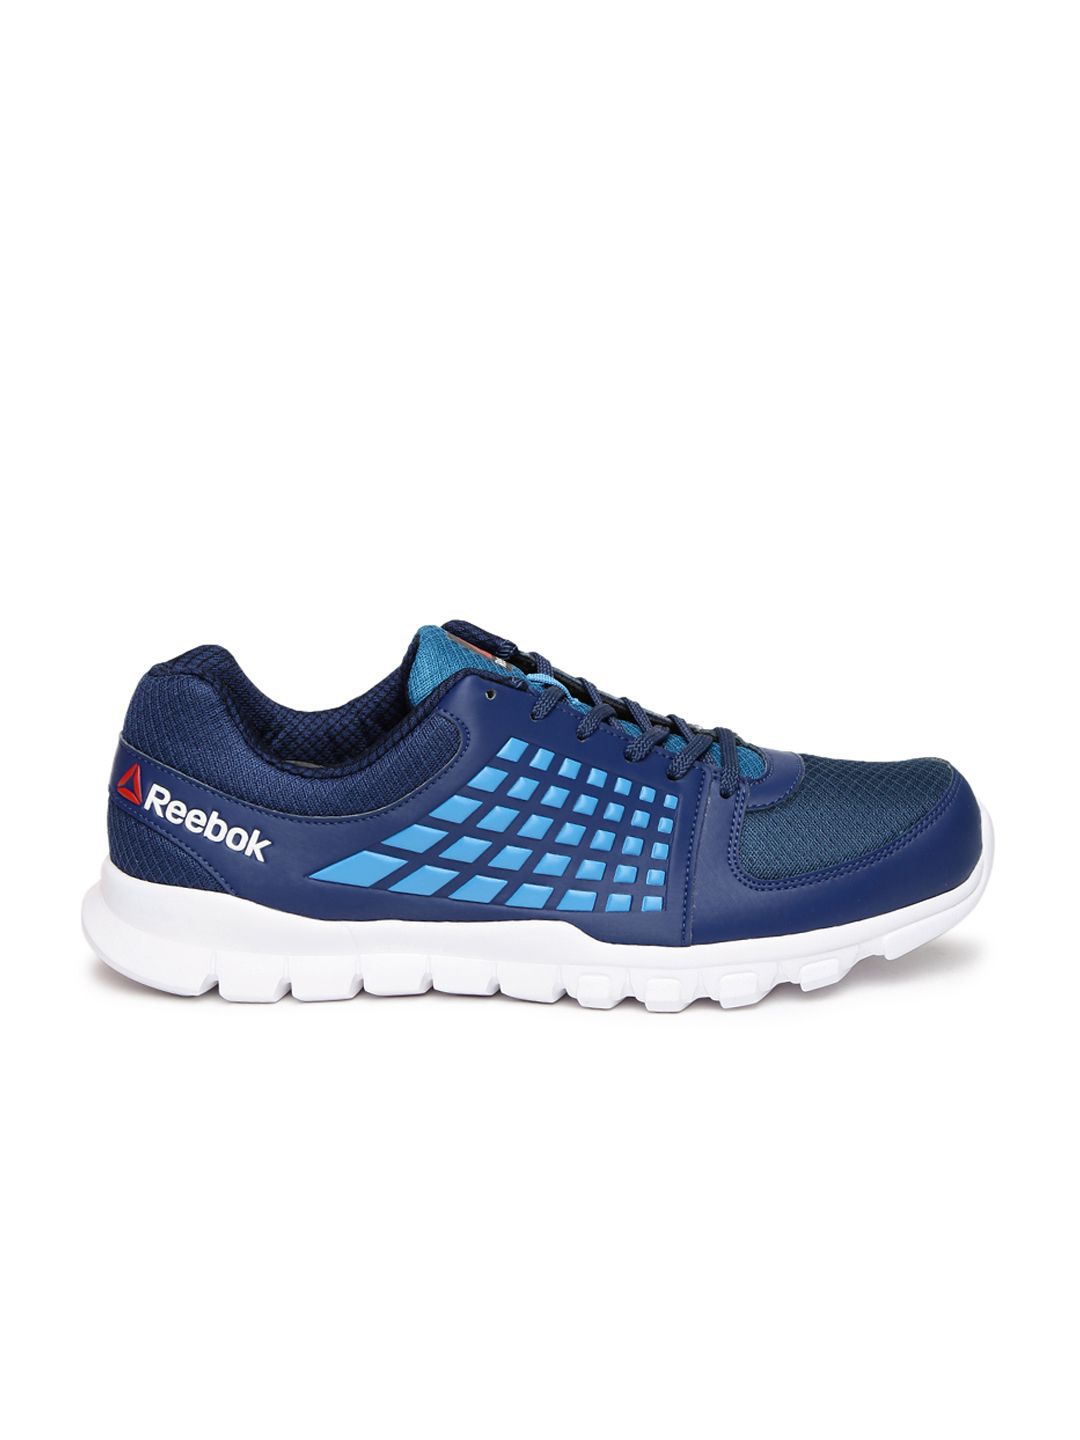 reebok electrify speed blue running shoes